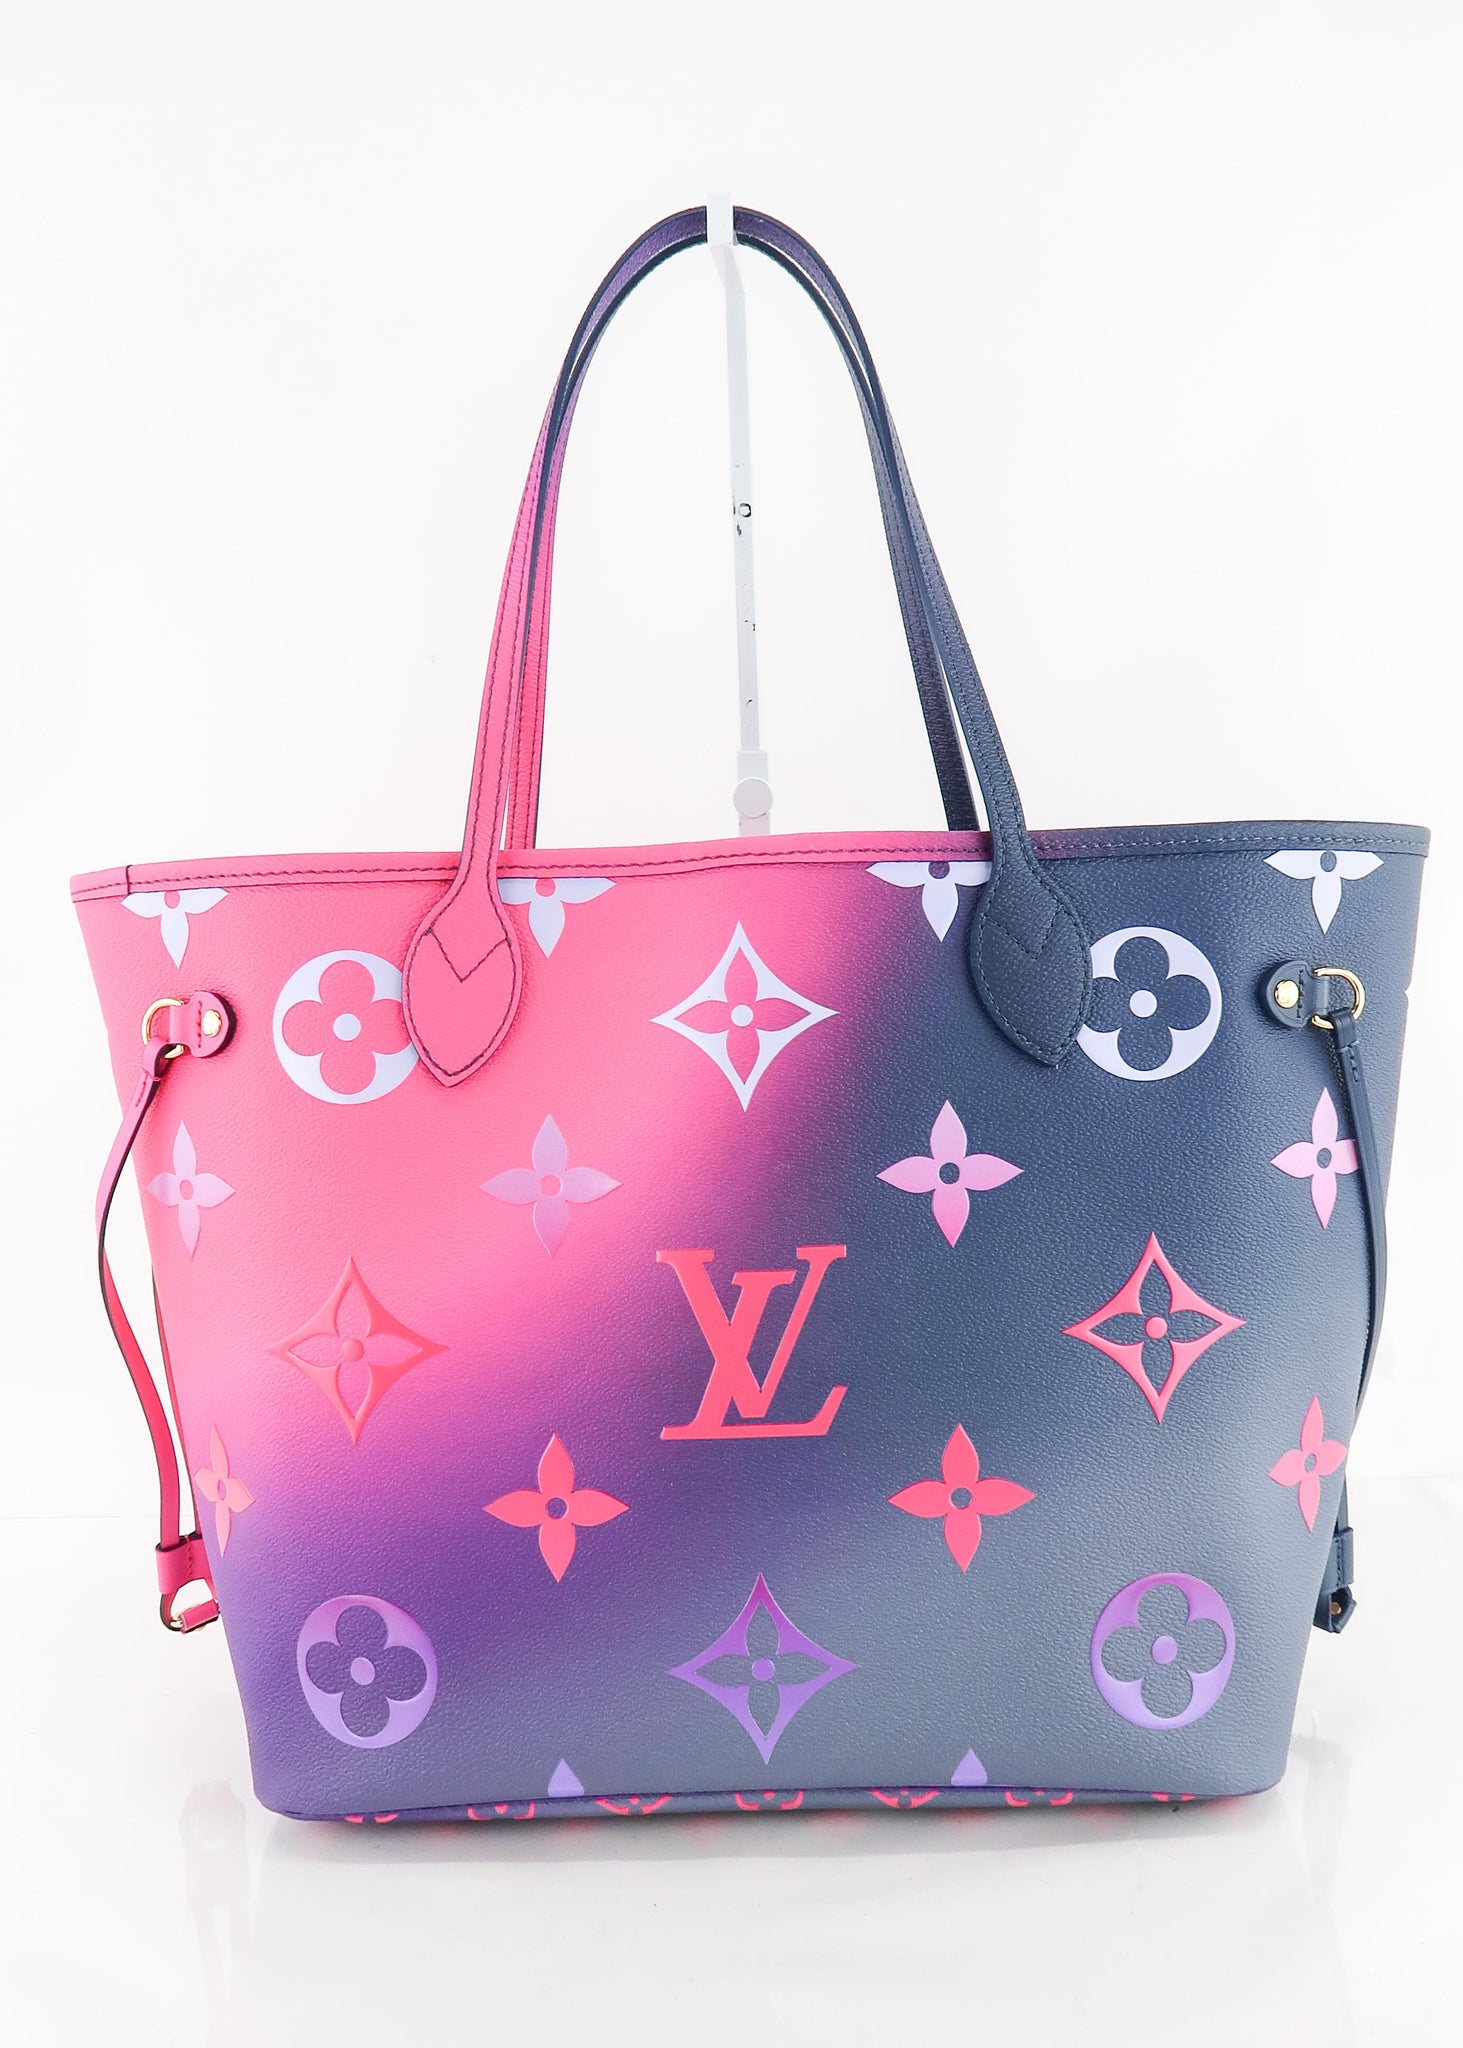 Should You Buy These Tie-Dye Louis Vuitton Bags? 